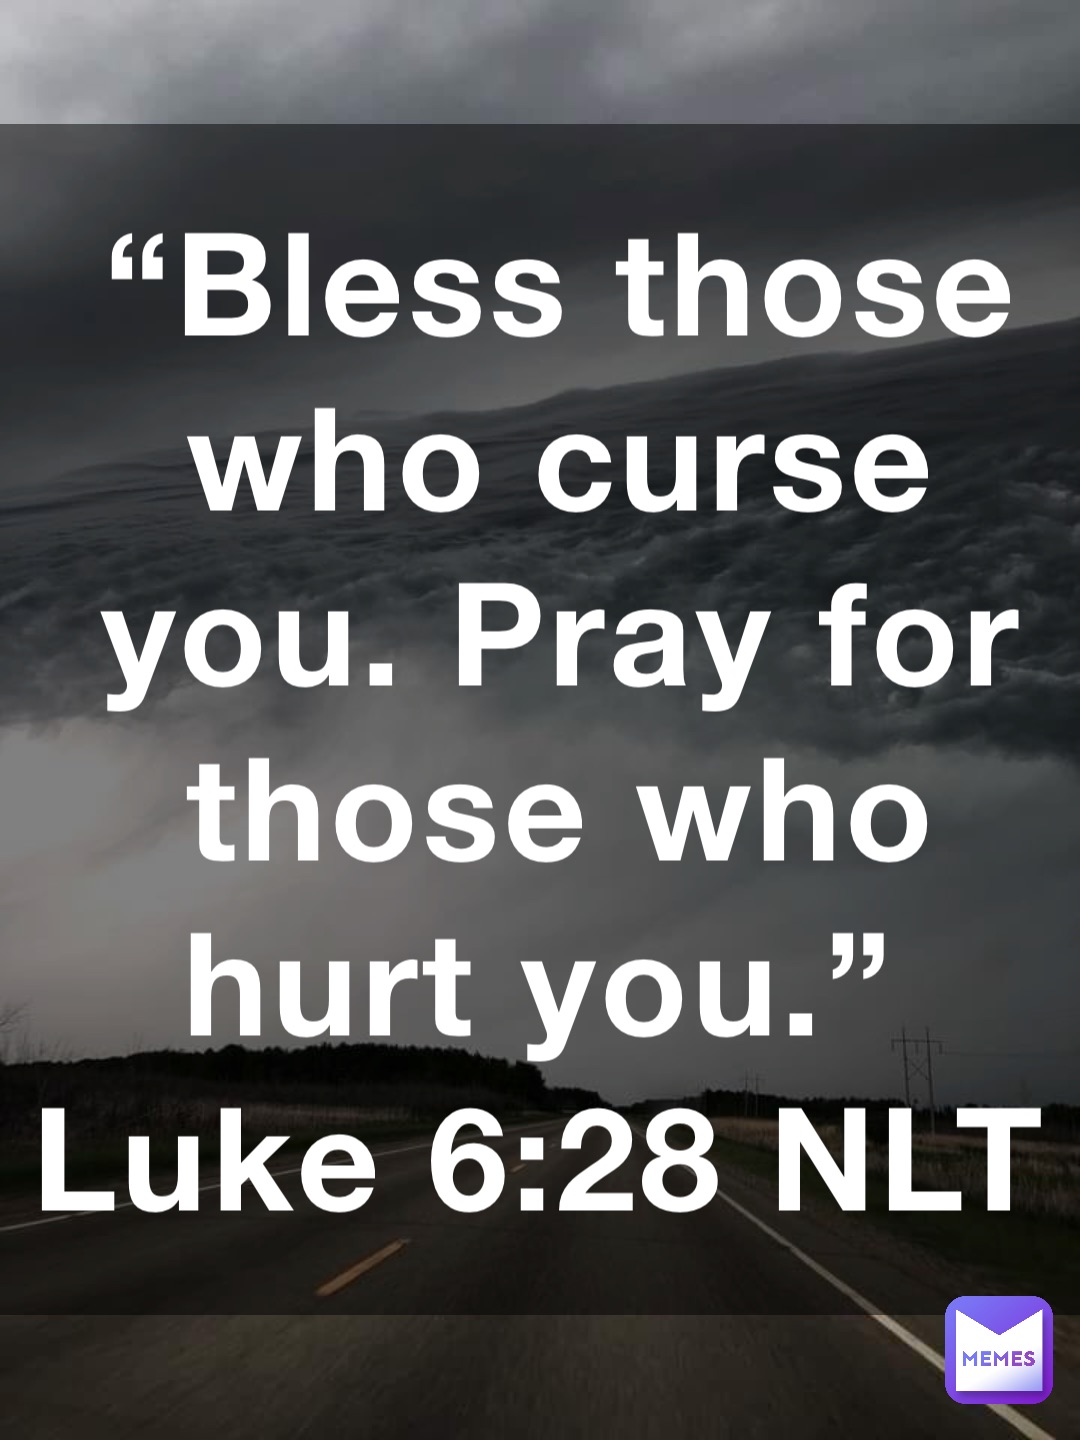 “Bless those who curse you. Pray for those who hurt you.”
‭‭Luke‬ ‭6:28‬ ‭NLT‬‬